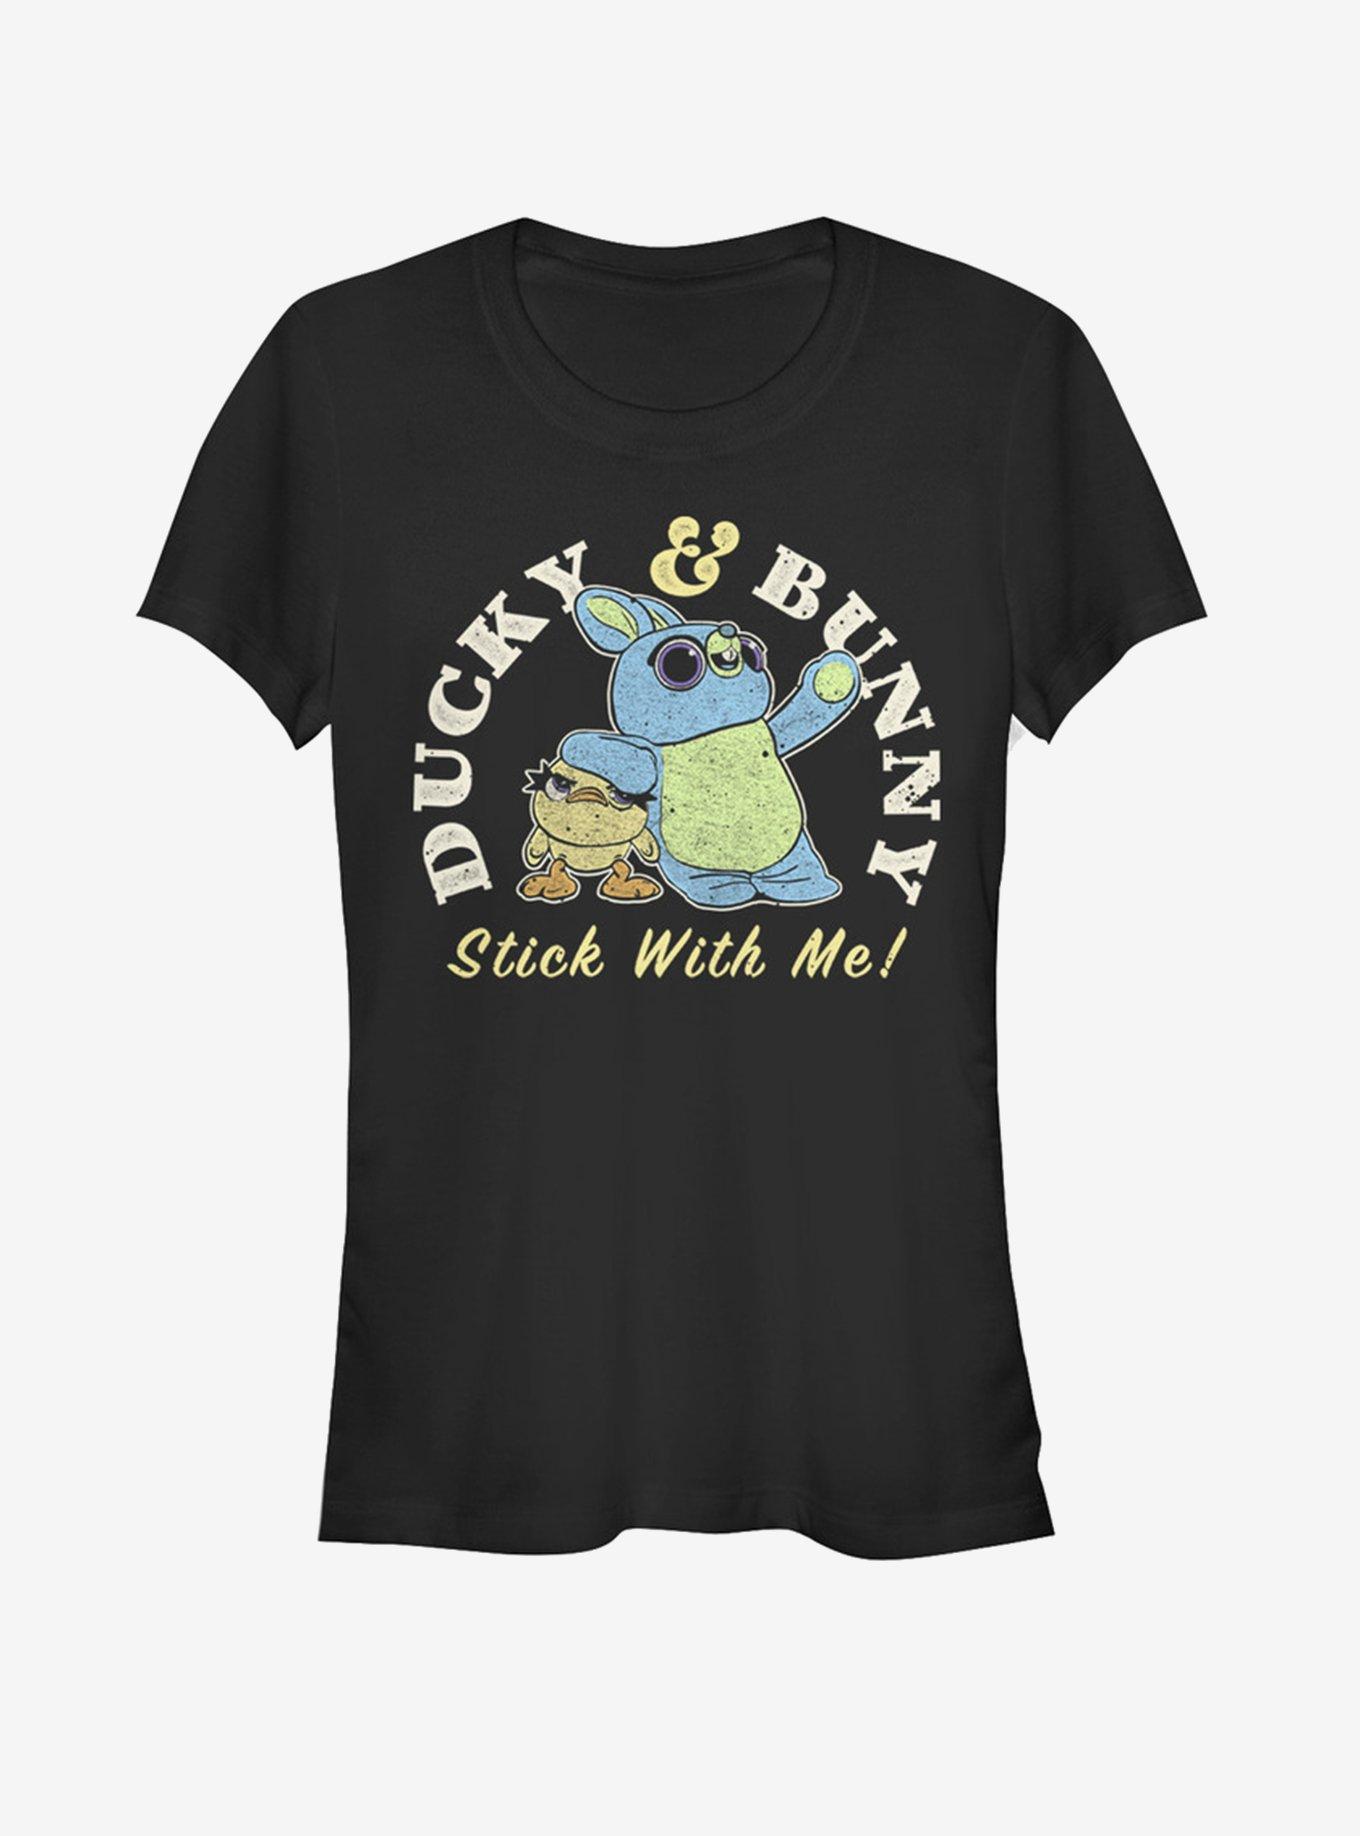 Disney Pixar Toy Story 4 Ducky And Bunny Brand Girls T-Shirt